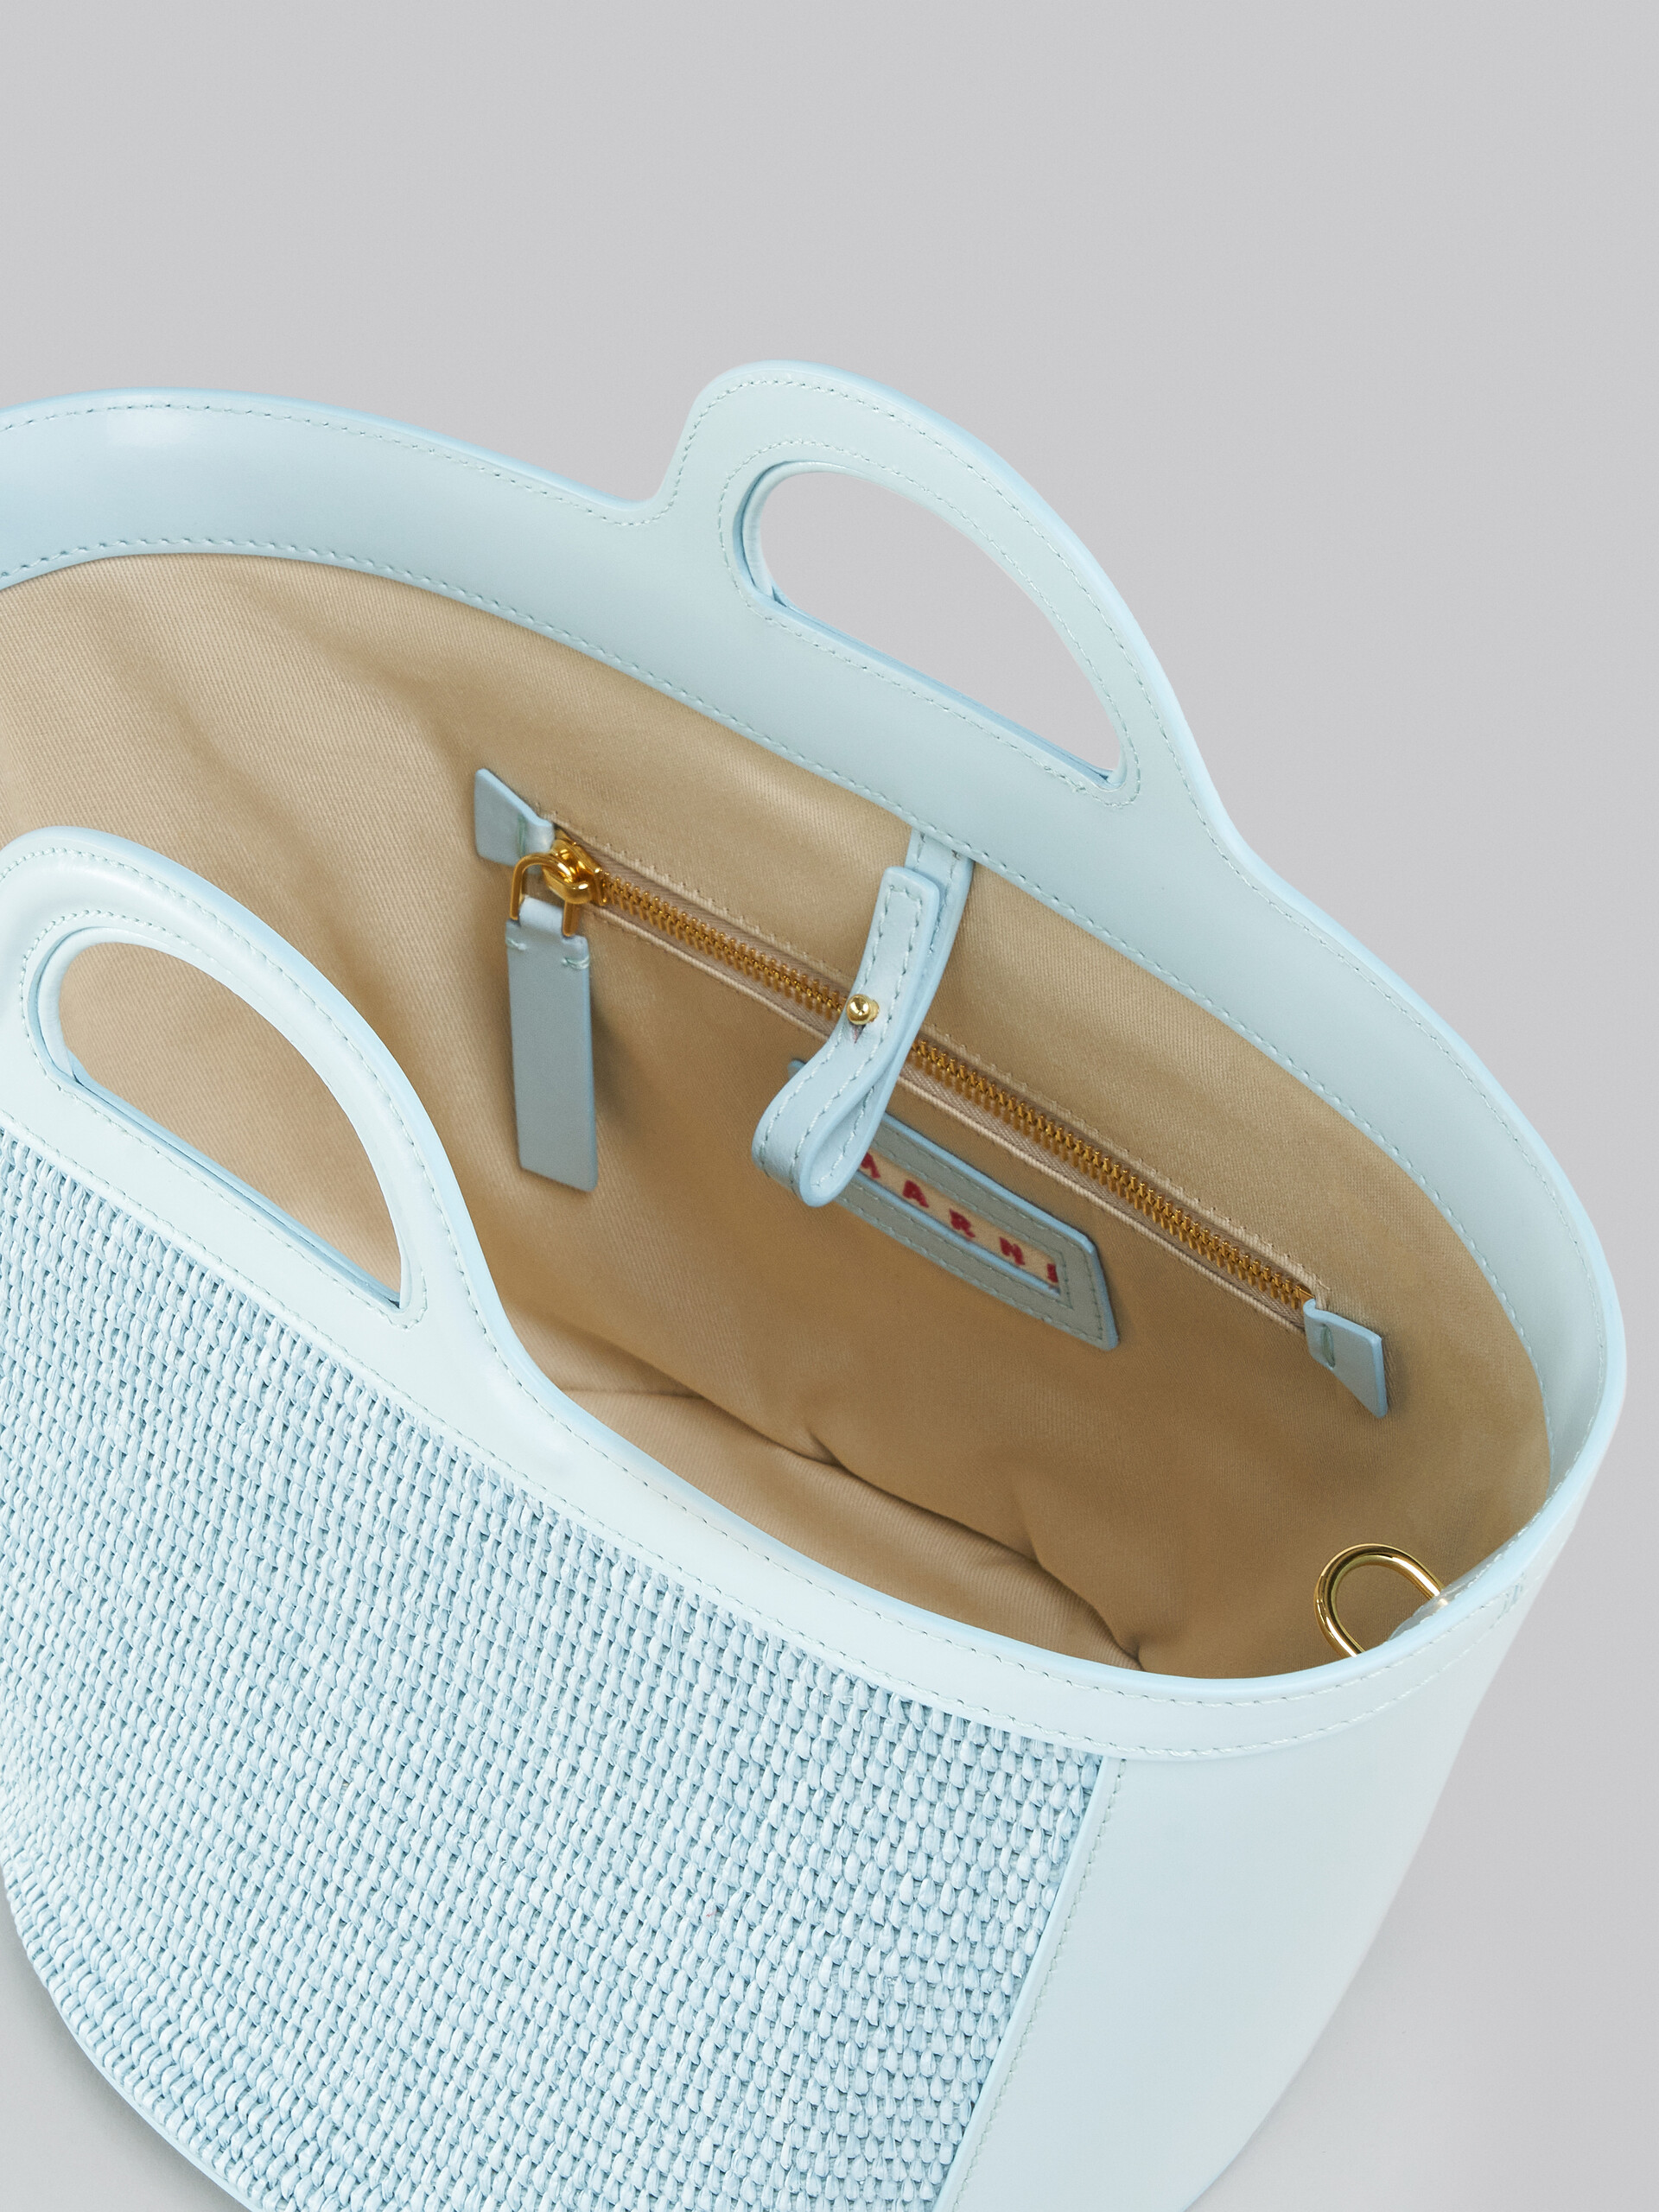 Tropicalia Small Bag in light blue leather and raffia-effect fabric - Handbags - Image 4